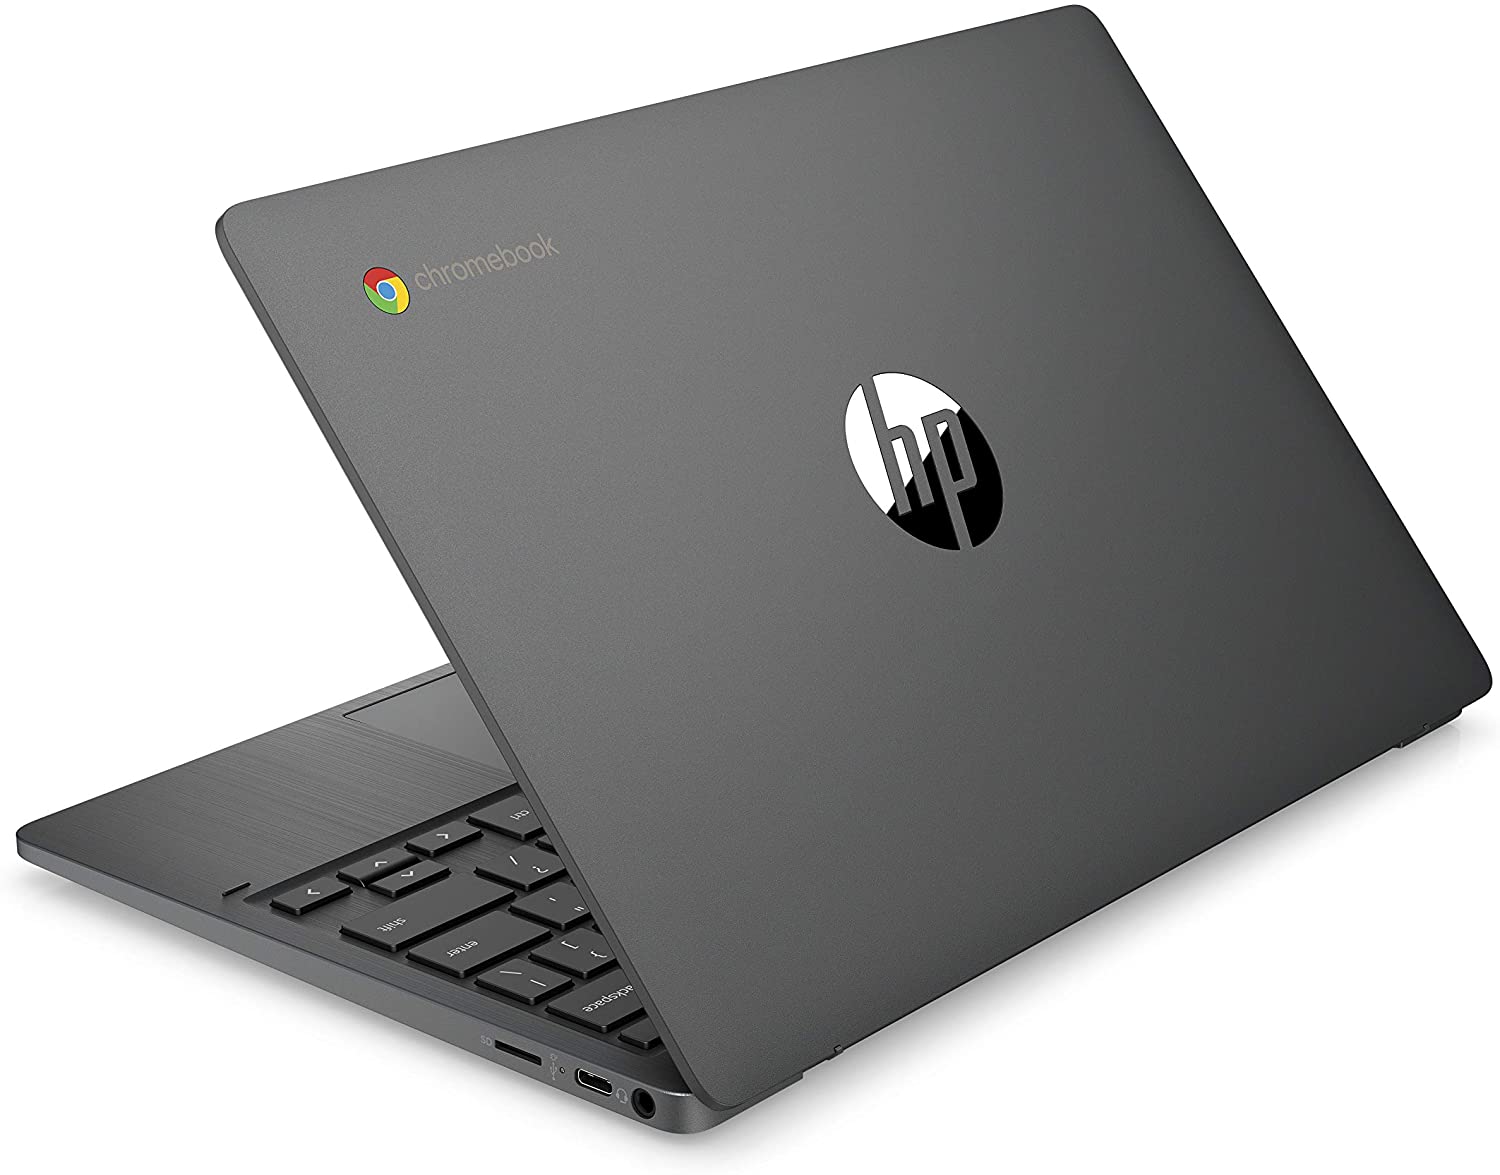 HP Chromebook 11 - MT8173c · PowerVR GX6250 · 11.6”, HD (1366 x 